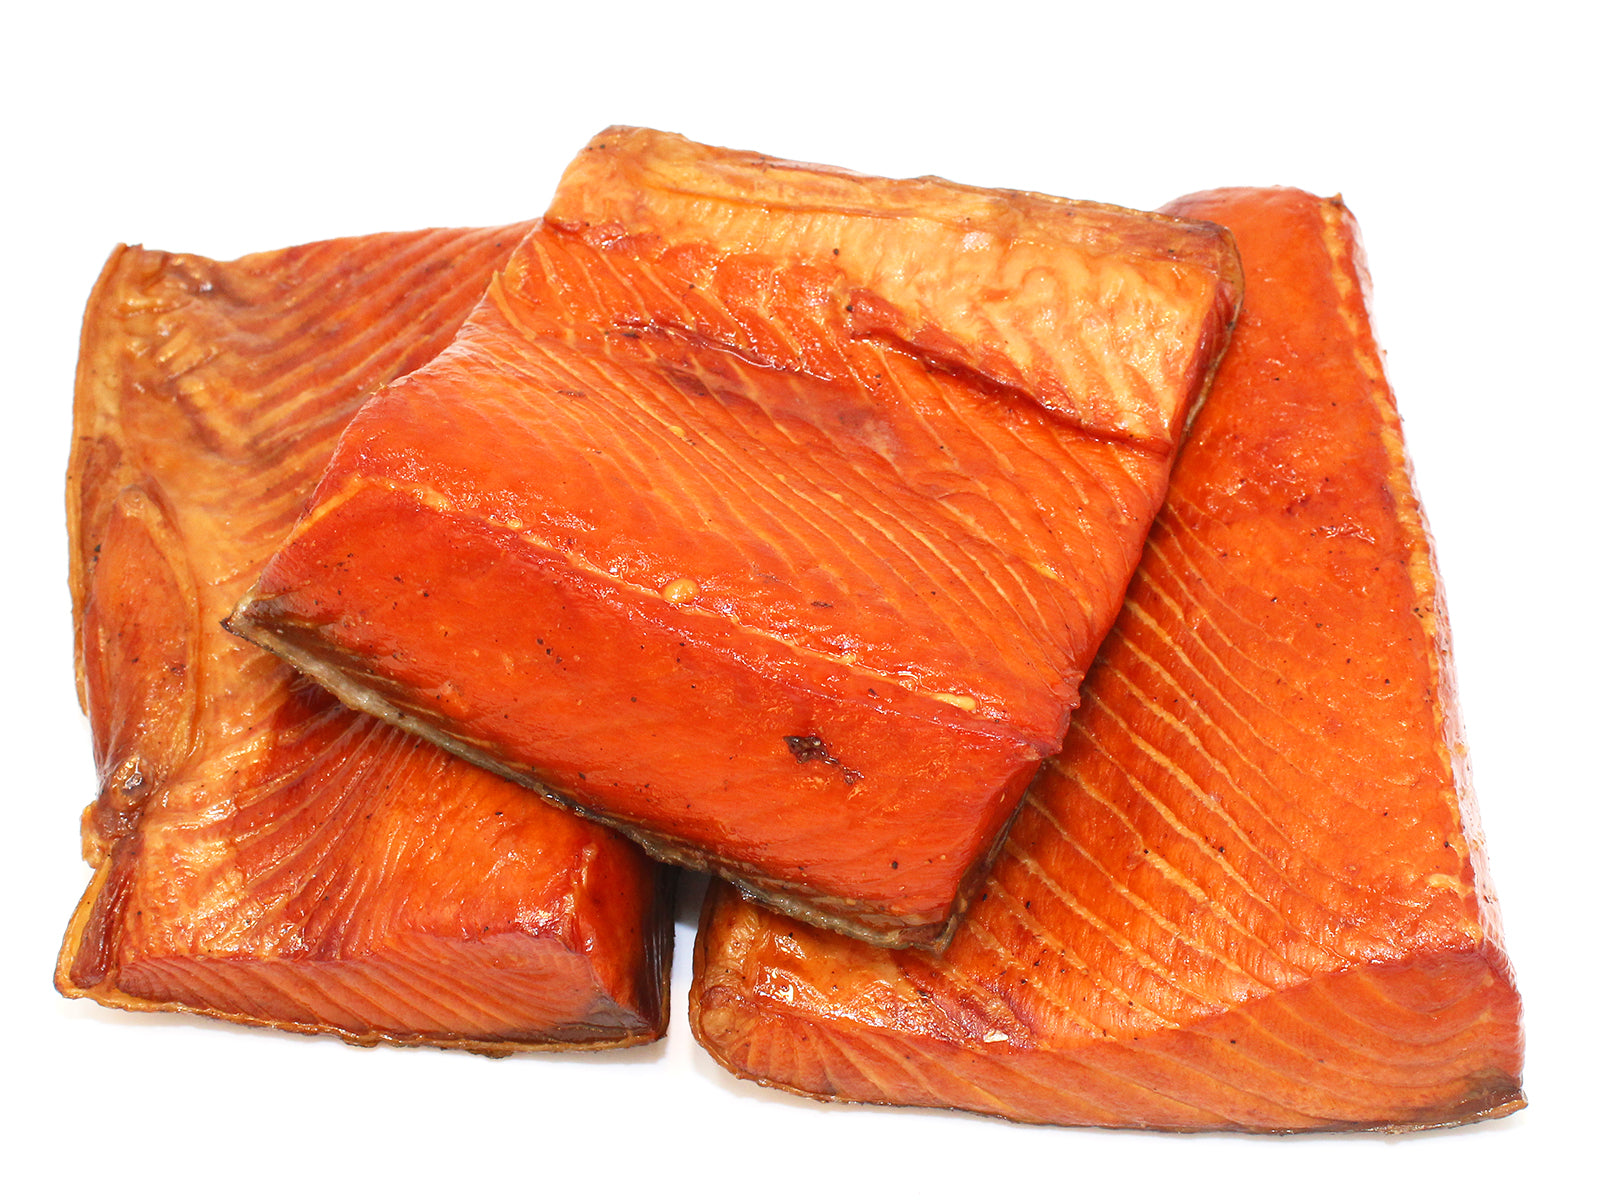 Forel, ryazan, smoked Fish, allbiz, Chum salmon, Kipper, lox, caviar, roe,  oily Fish